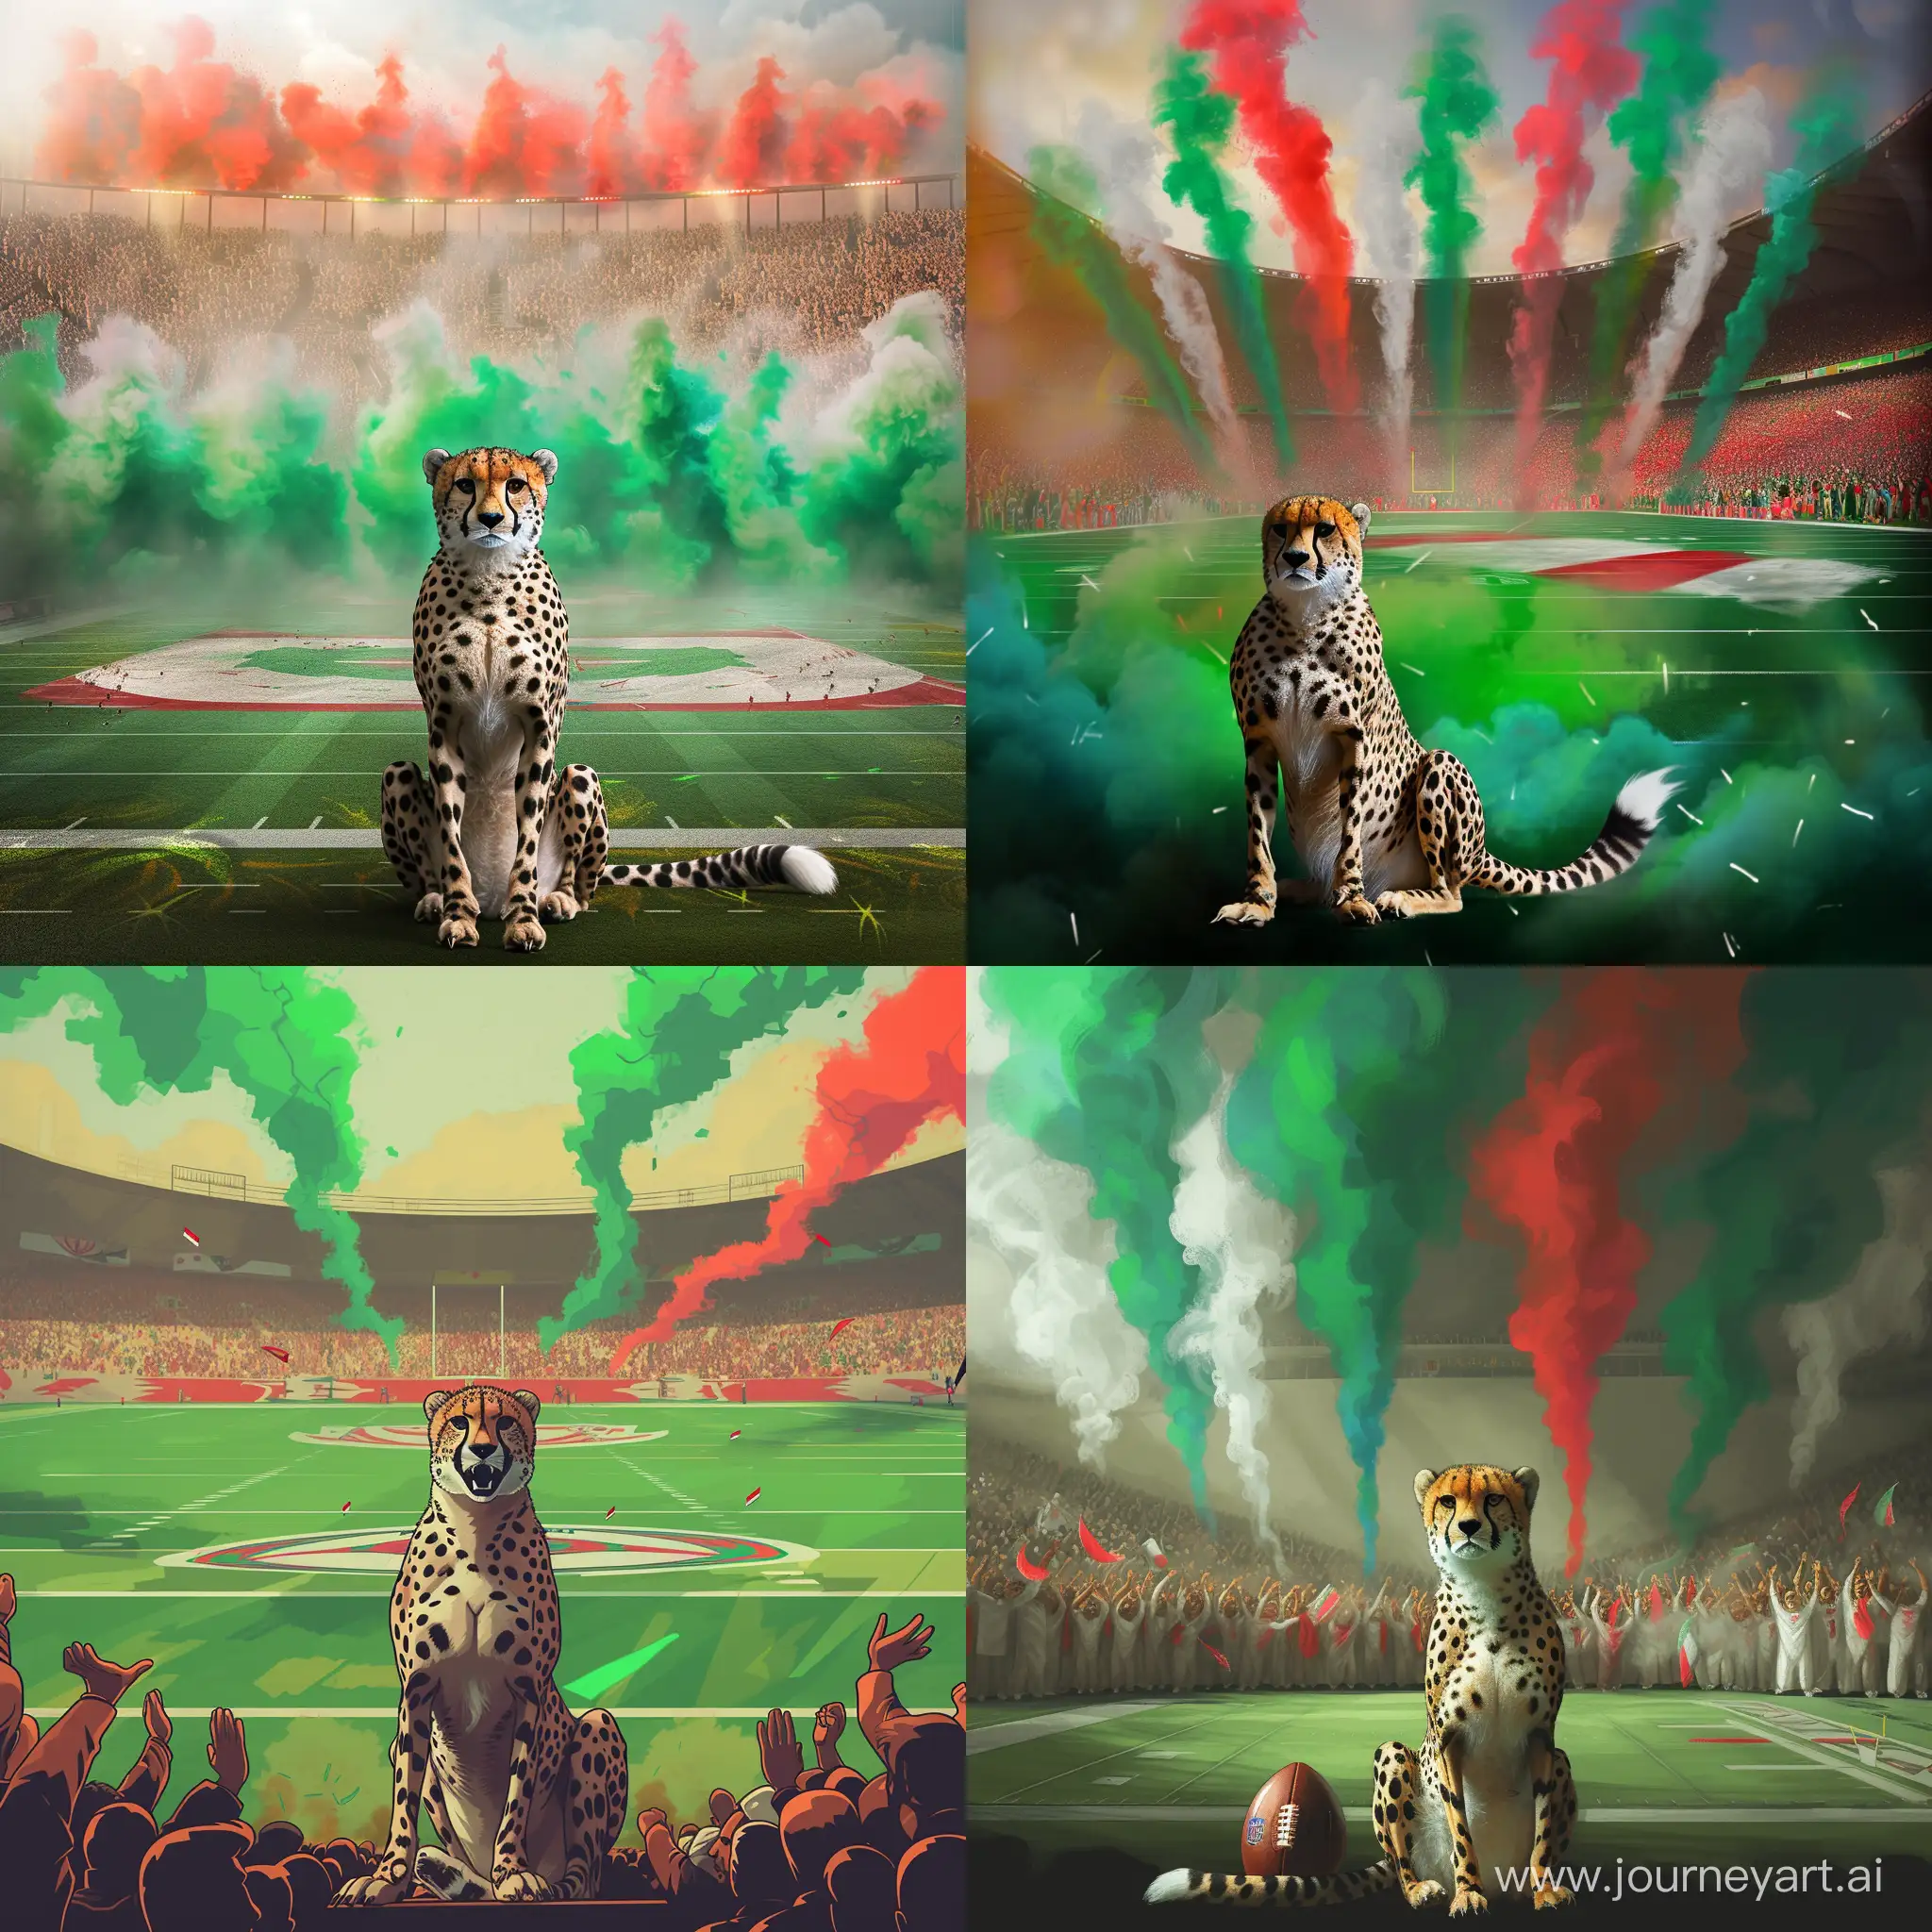 Iranian-Cheetah-on-Football-Field-with-Vibrant-Spectators